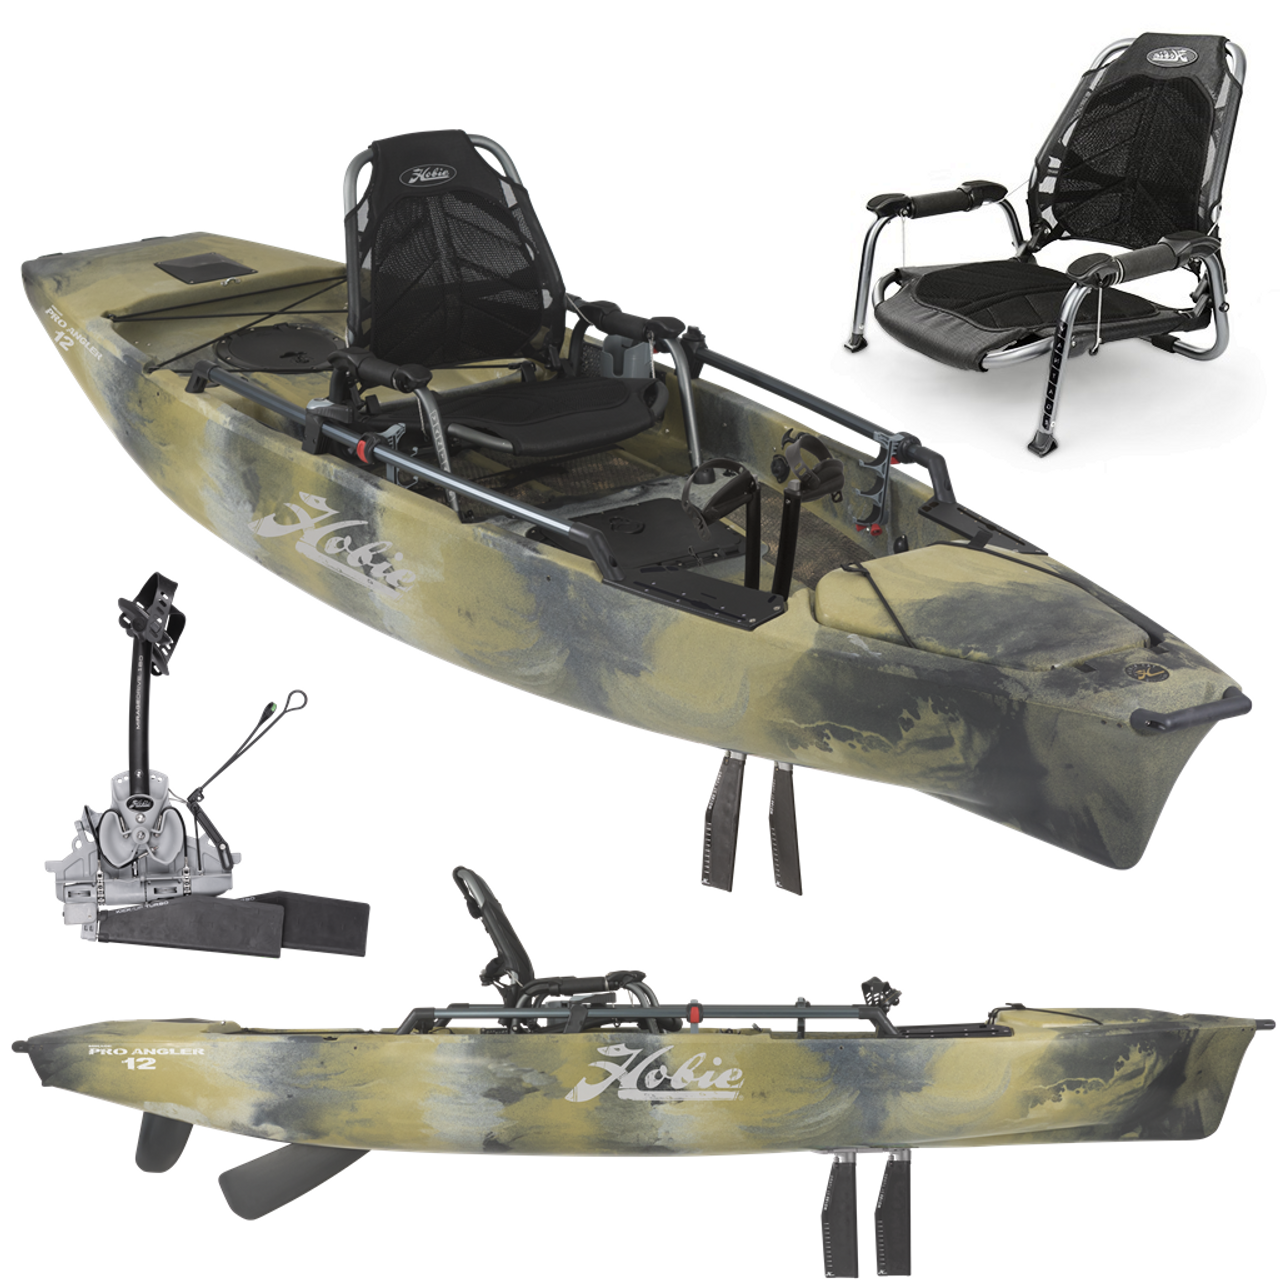 Hobie Mirage Pro Angler 12 - Fishing Kayak with Kick Up Turbo Fins